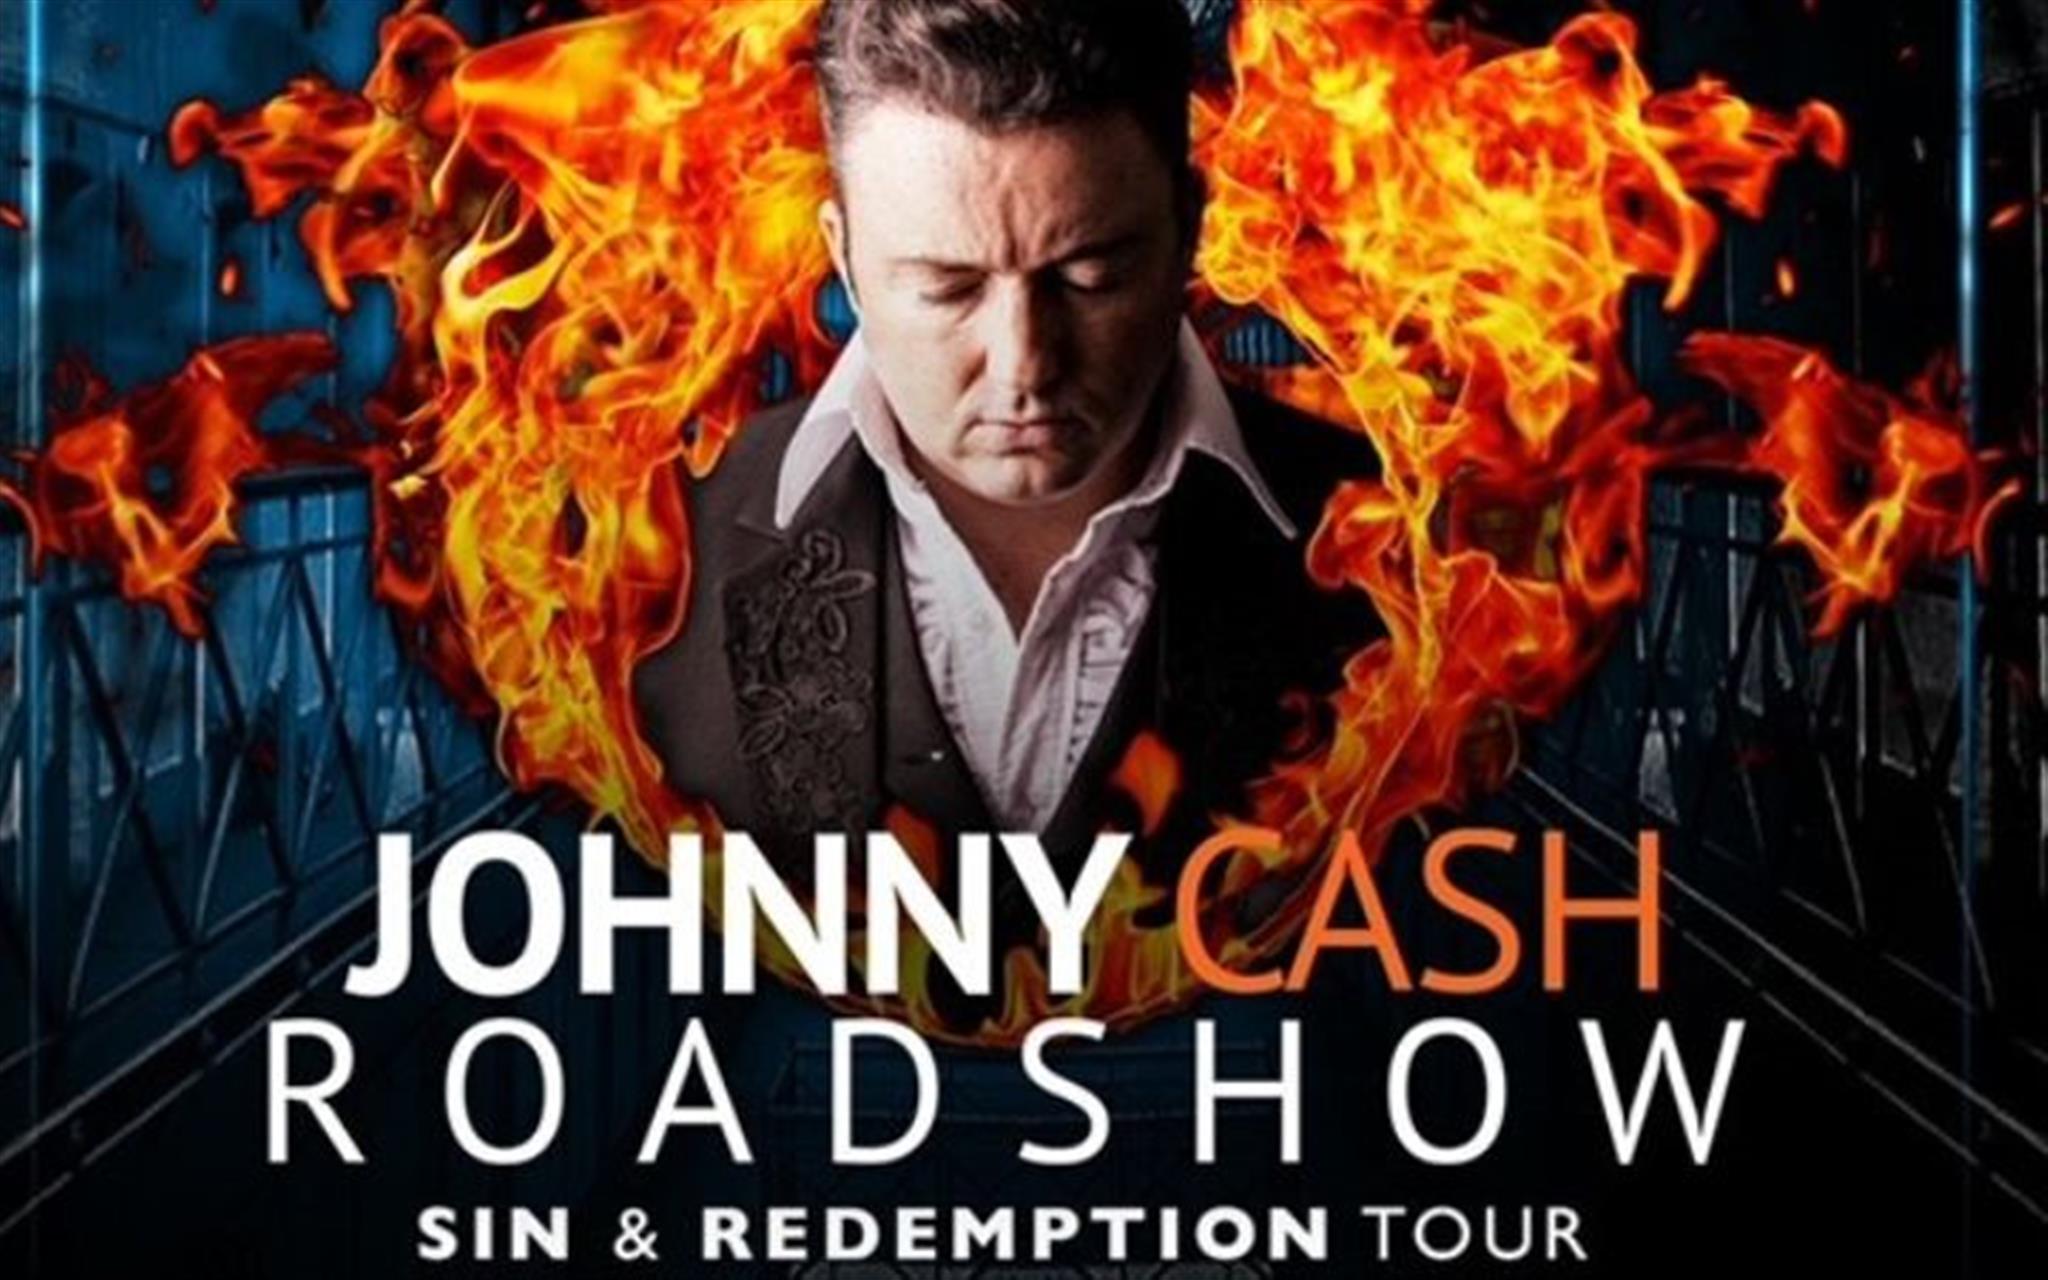 Johnny Cash Roadshow image